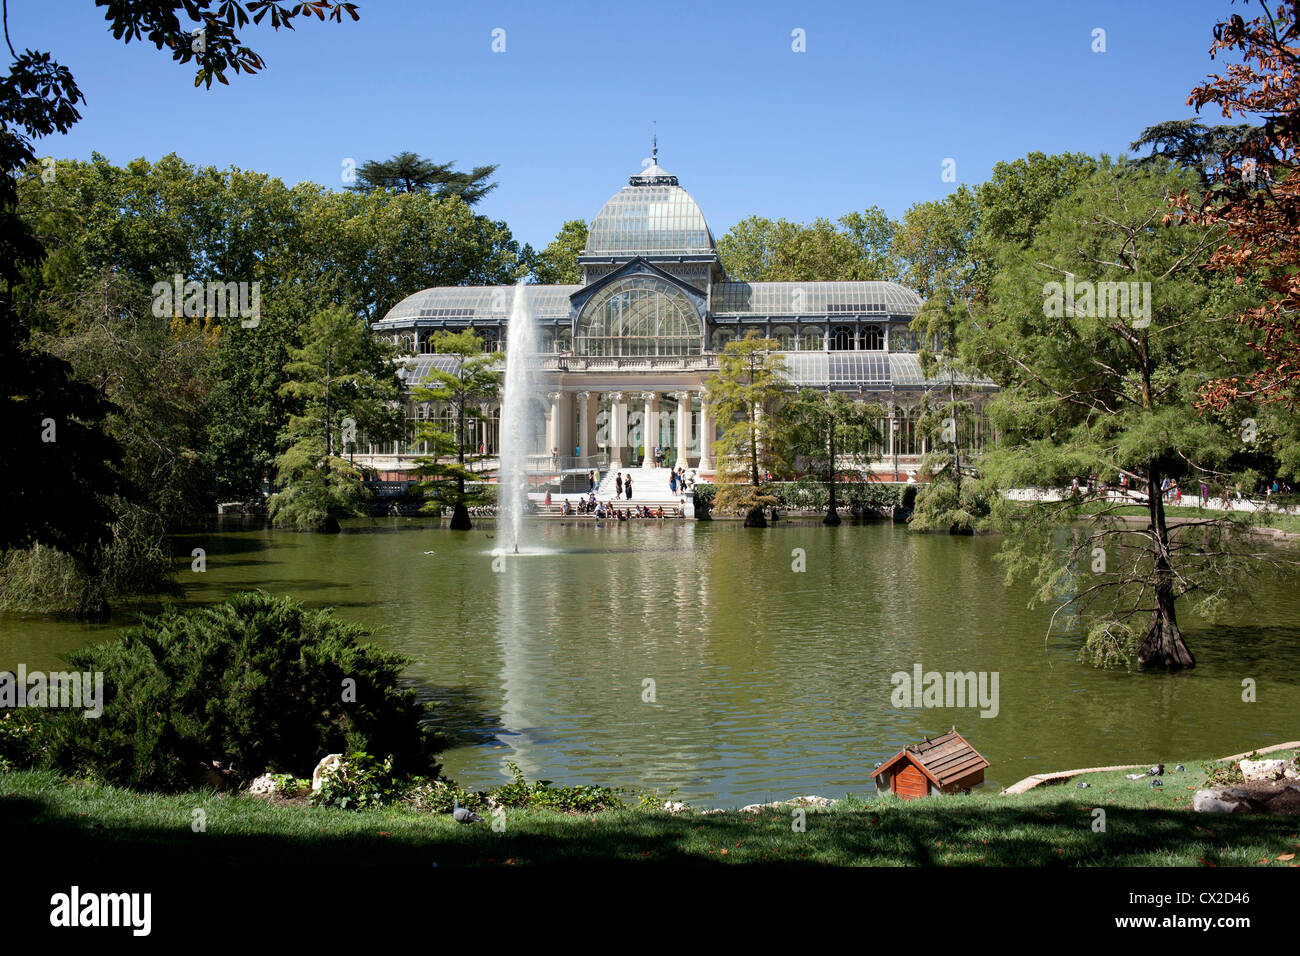 The Palacio de Cristal is a vast glass conservatory designed by Ricardo Velazquez Bosco that sits in The Retiro Park, Madrid. Stock Photo